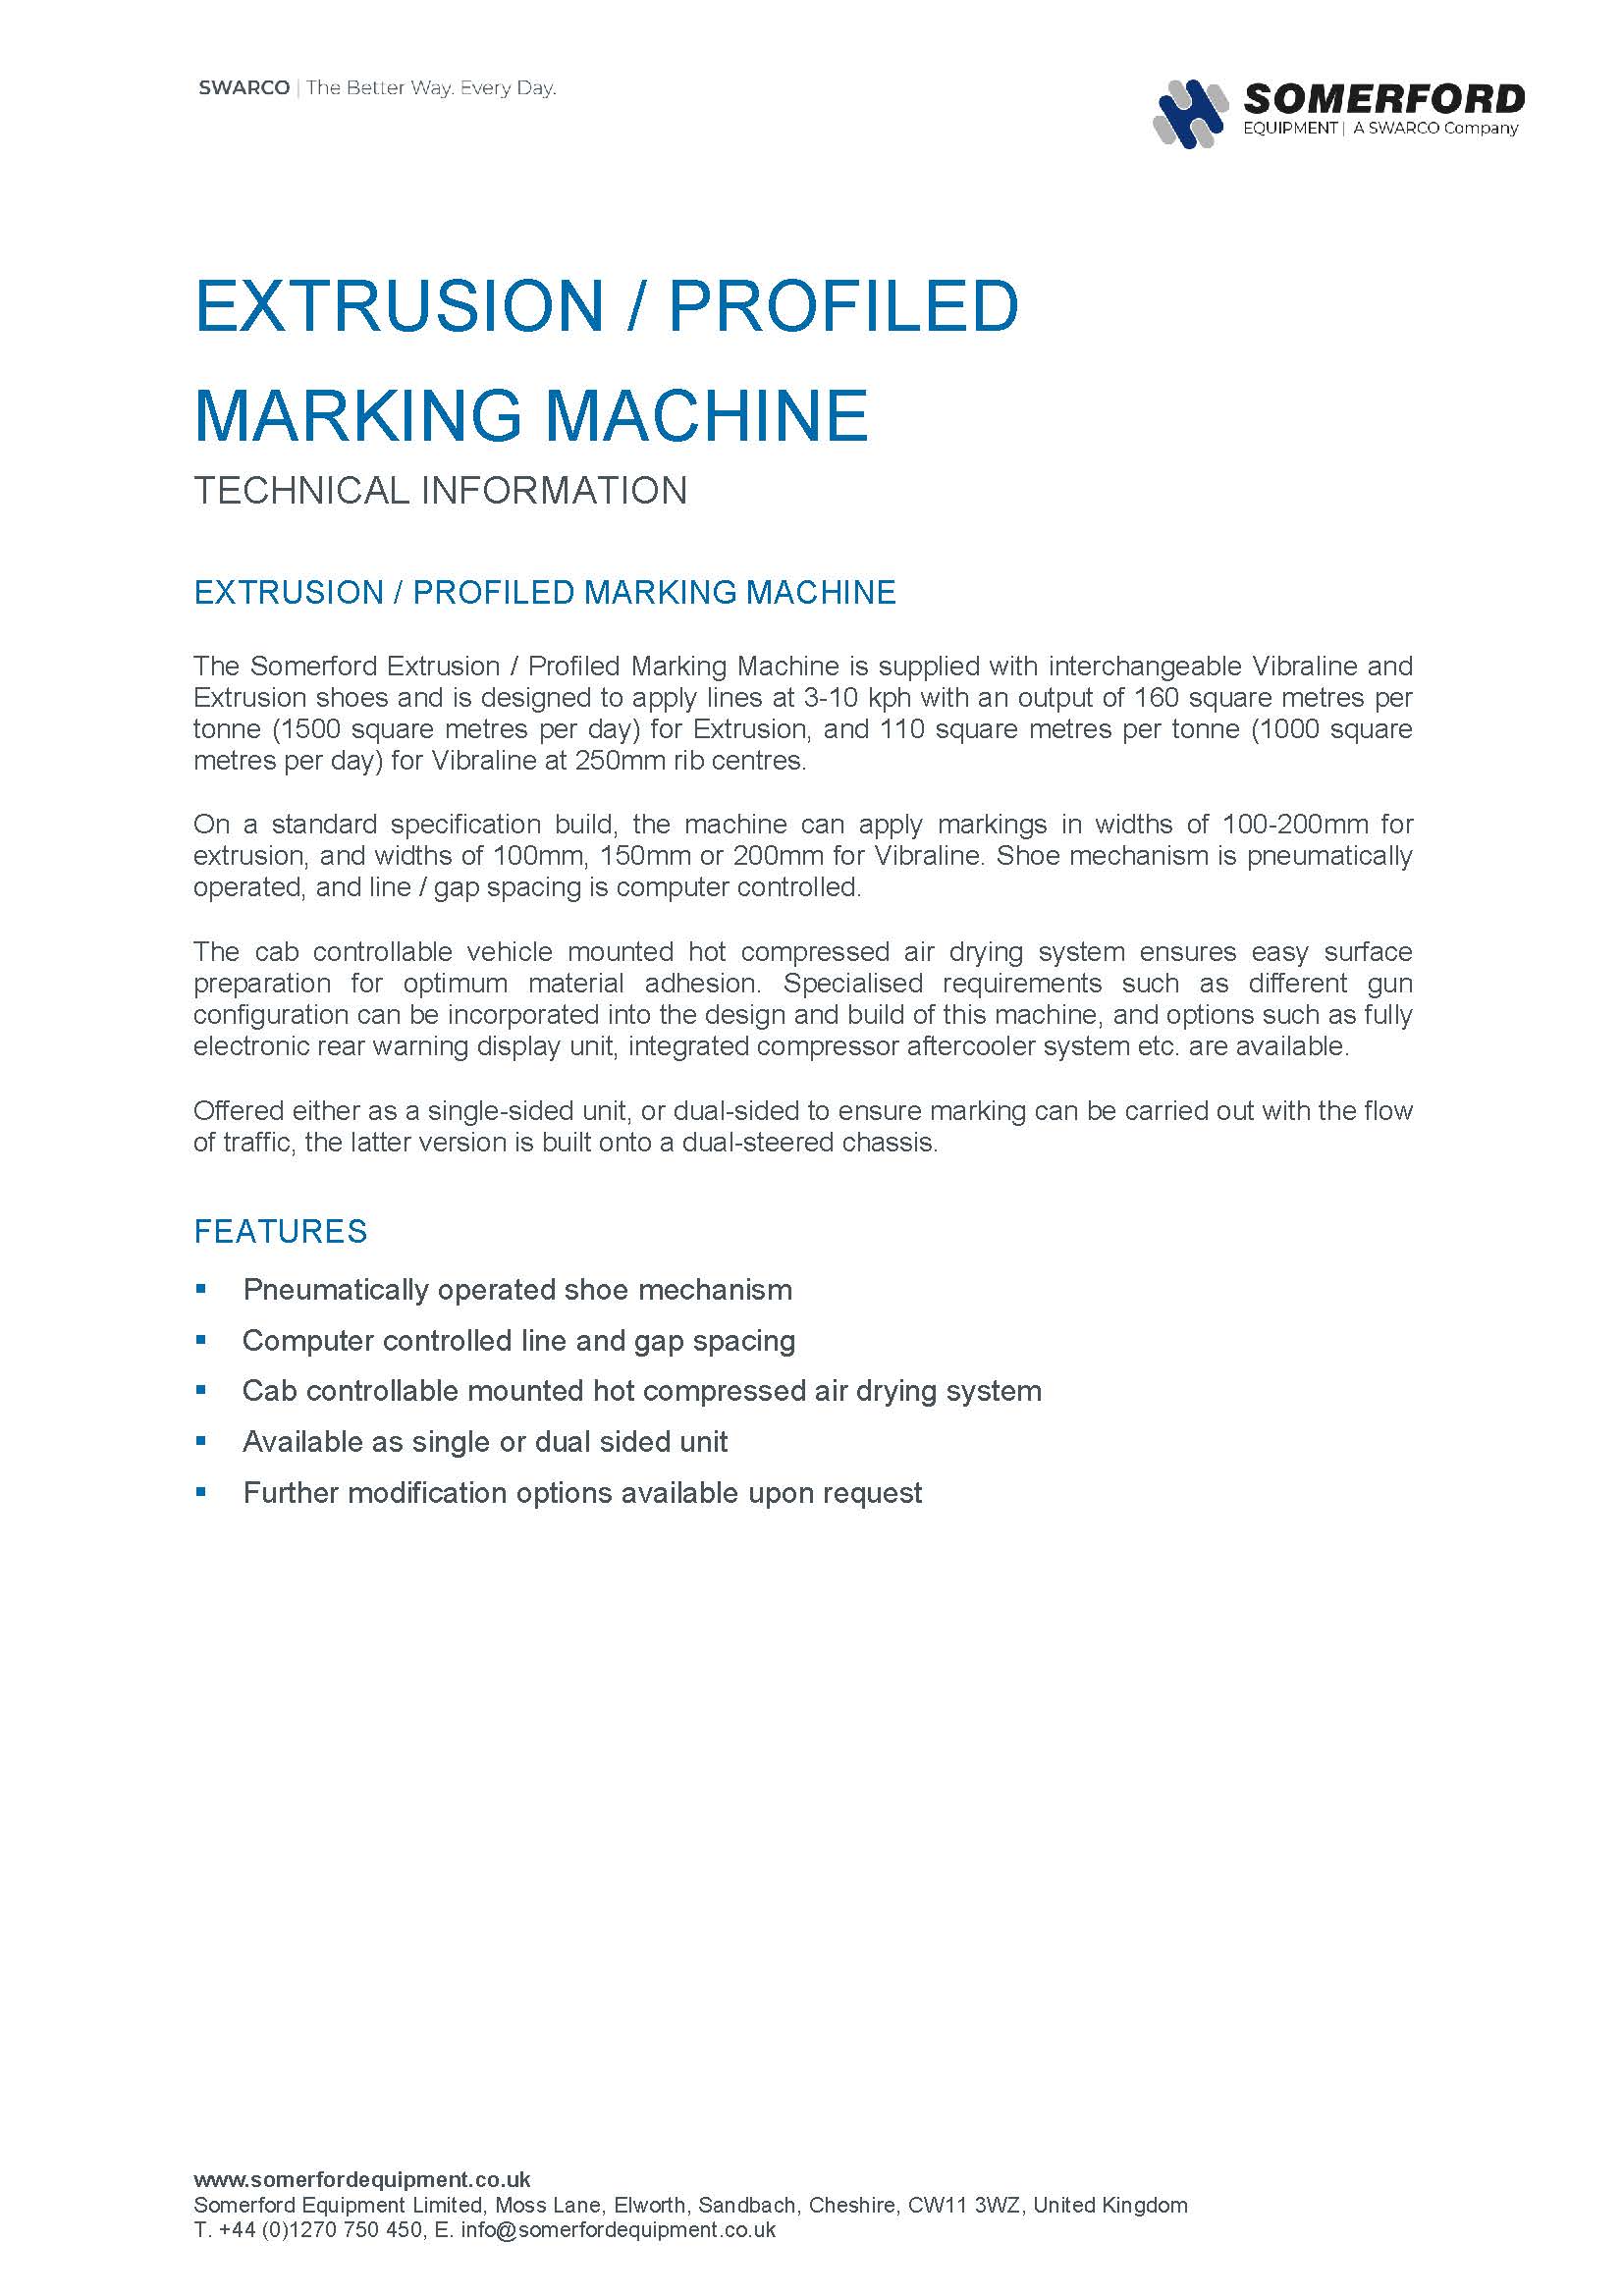 Extrusion Profiled Marking Machine